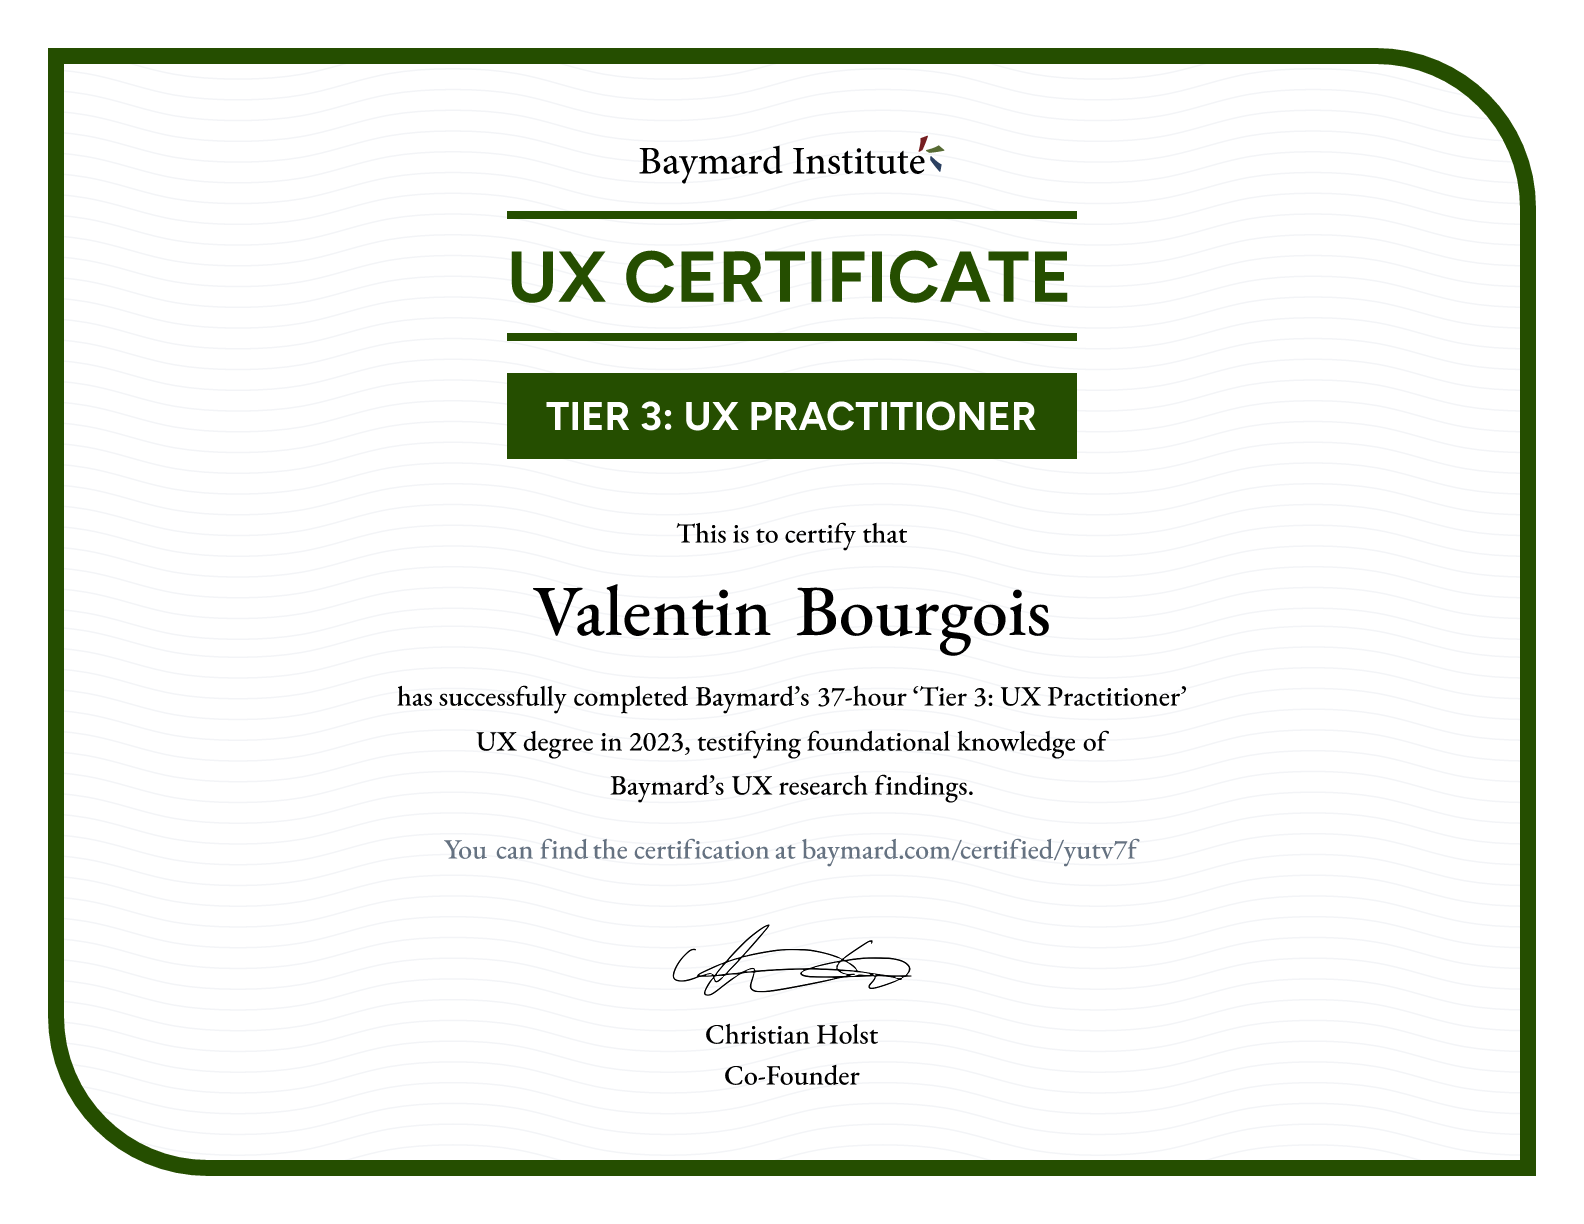 Valentin Bourgois’s certificate